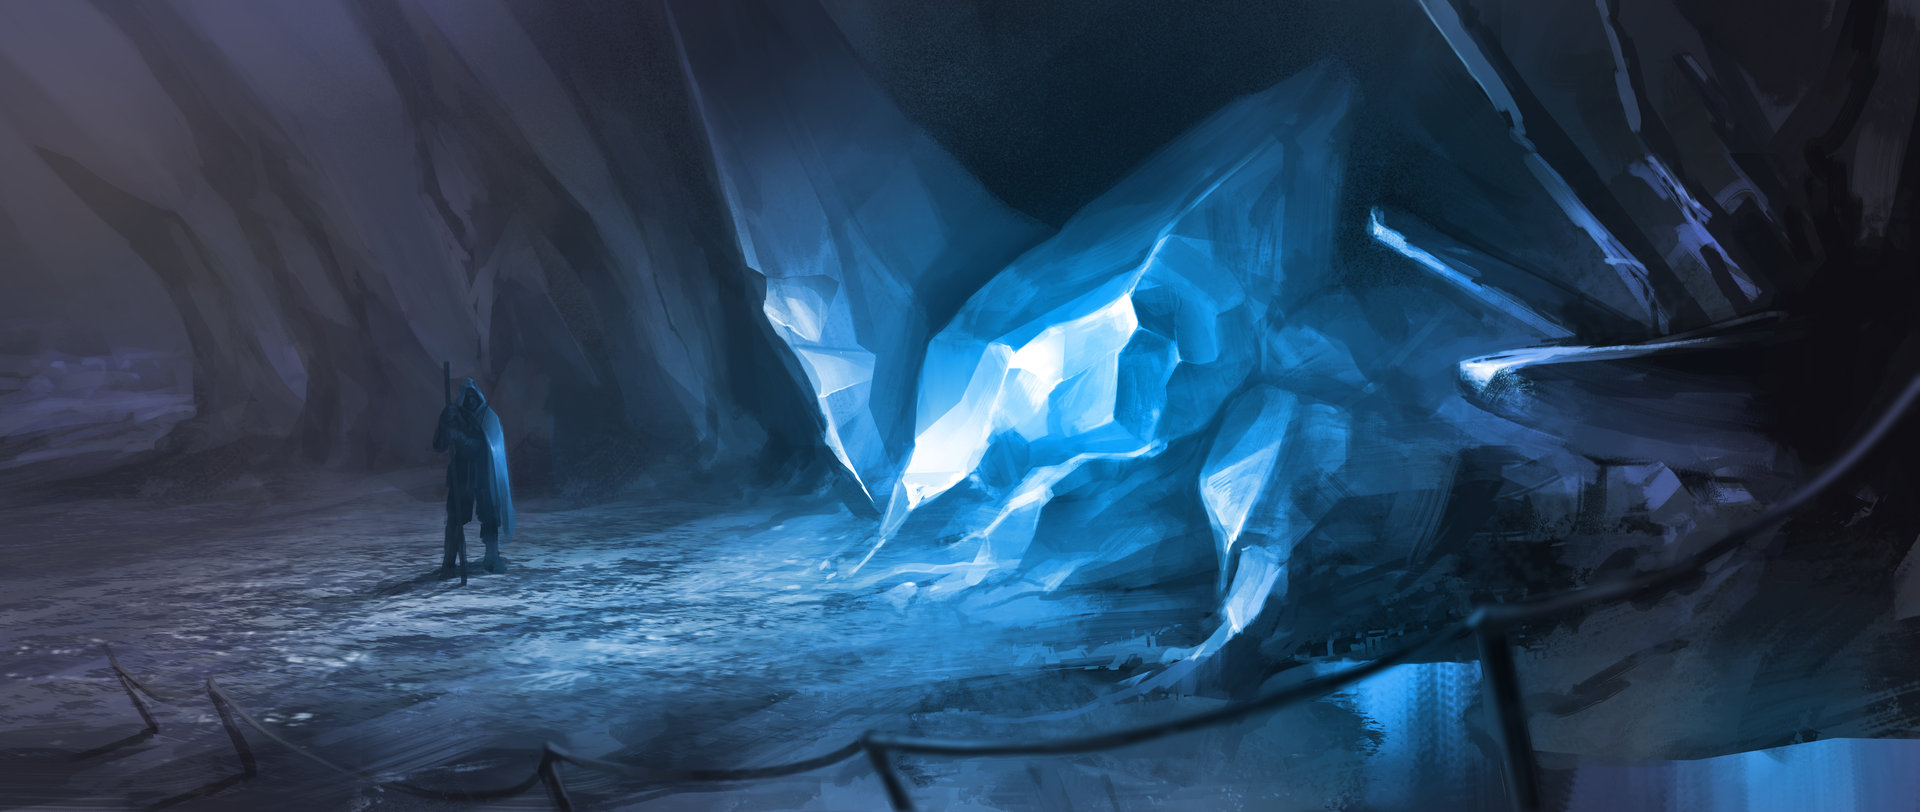 Ether Crystal Cavern